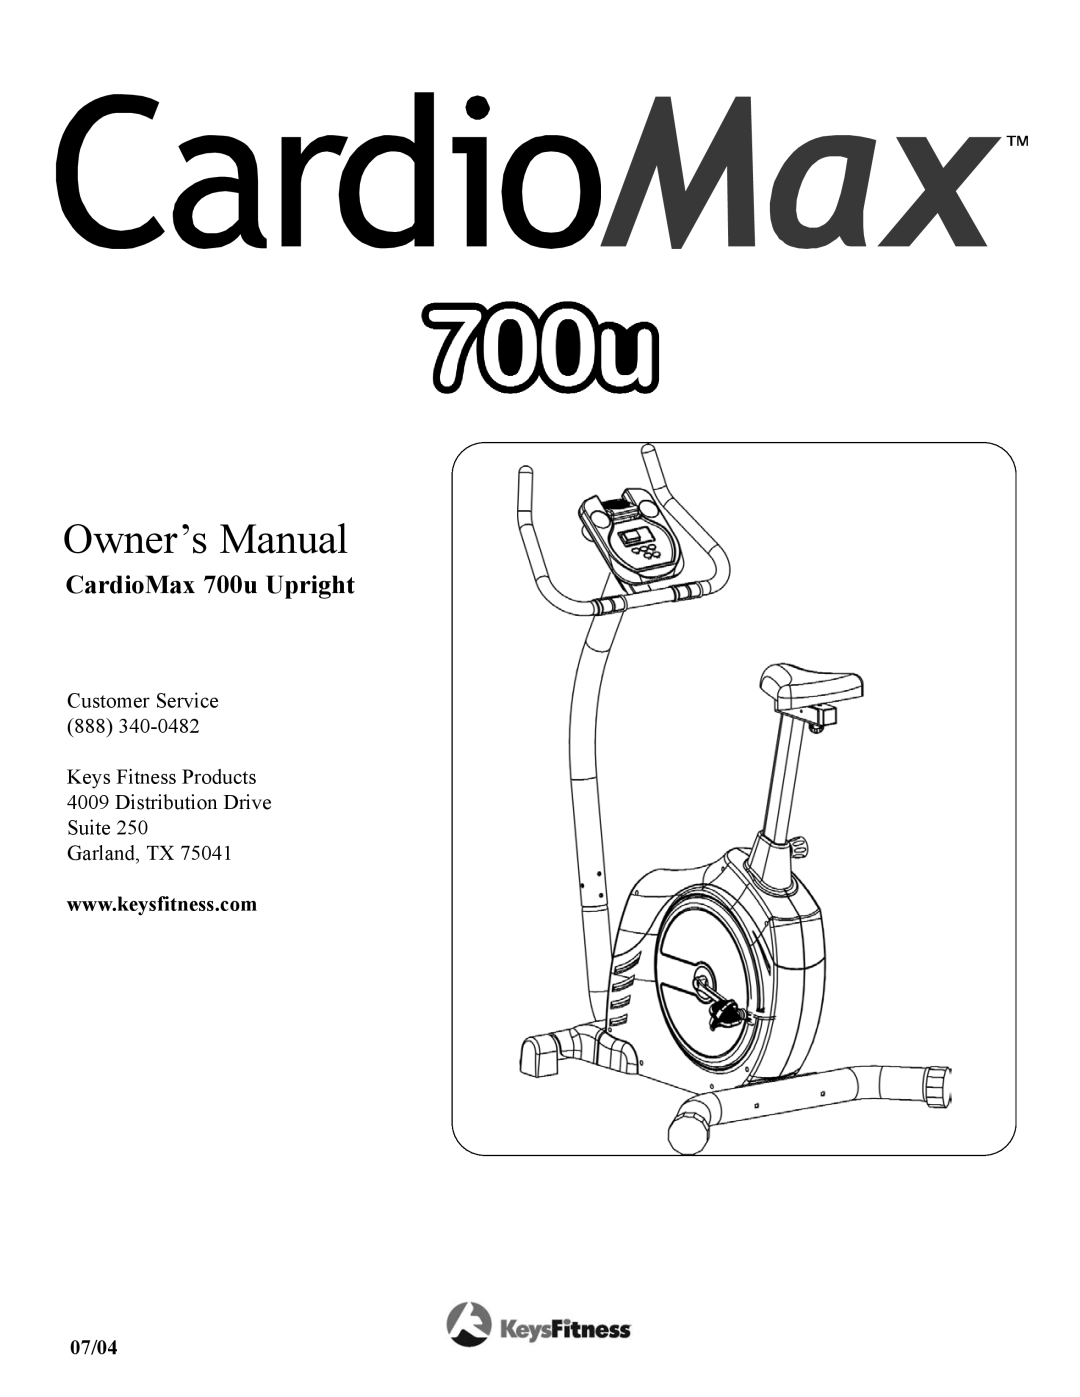 Keys Fitness owner manual Owner’s Manual, CardioMax 700u Upright 